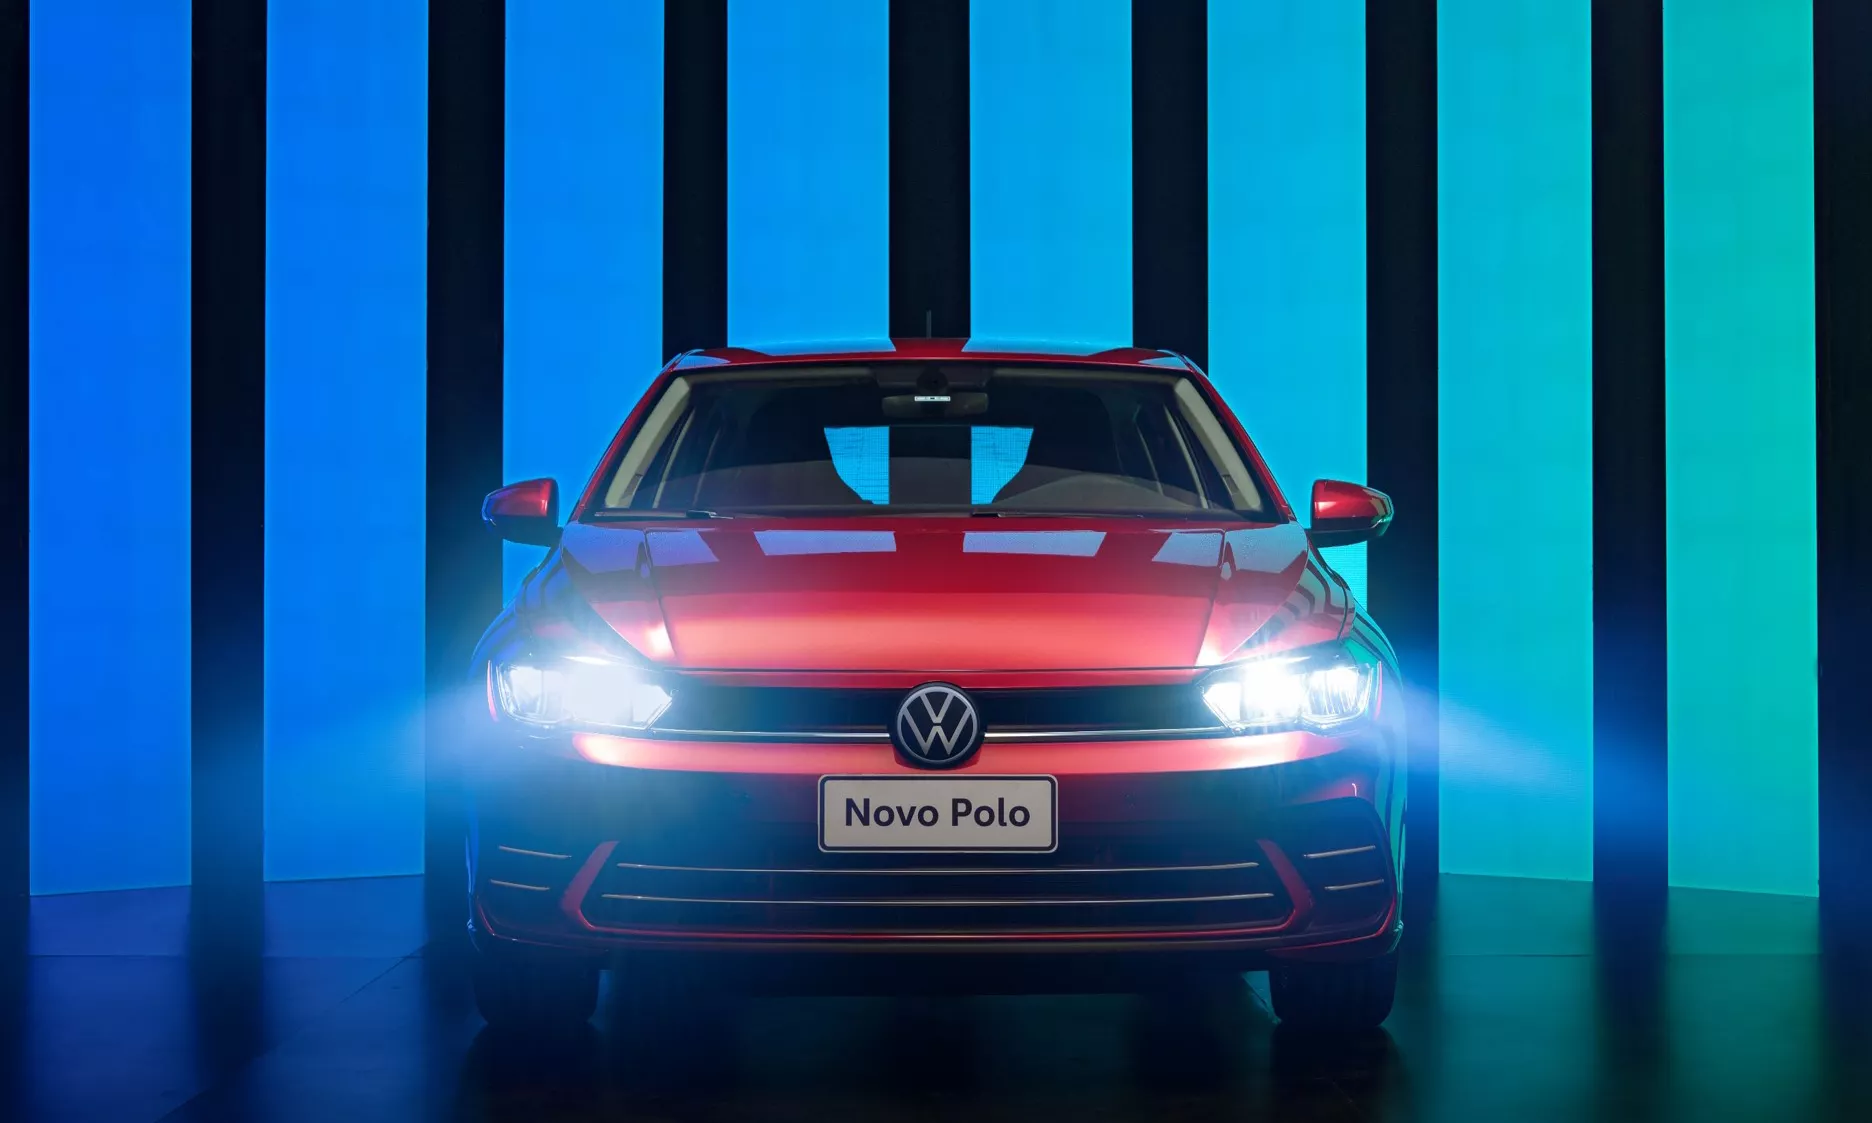 Foto Volkswagen - Novo Polo